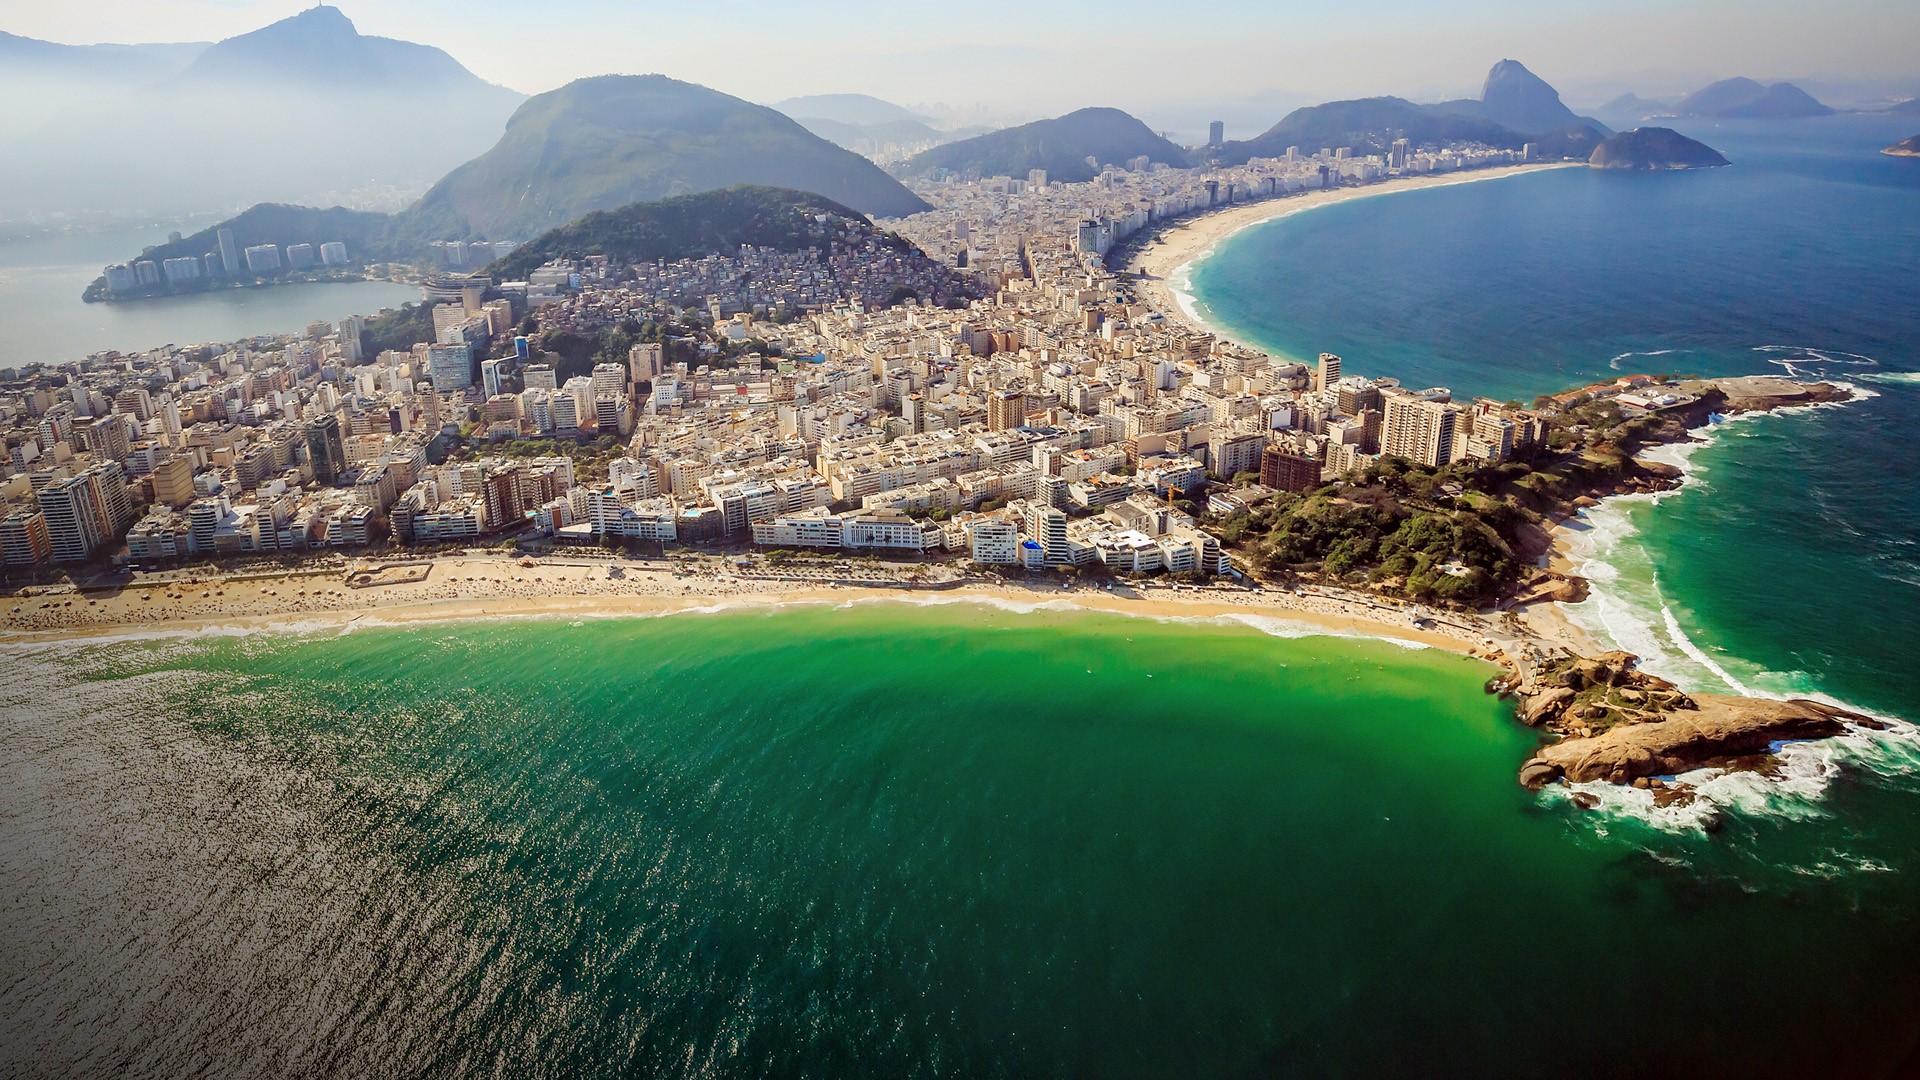 Aerial view of Copacabana Beach and Ipanema beach in Rio de Janeiro, Brazil.